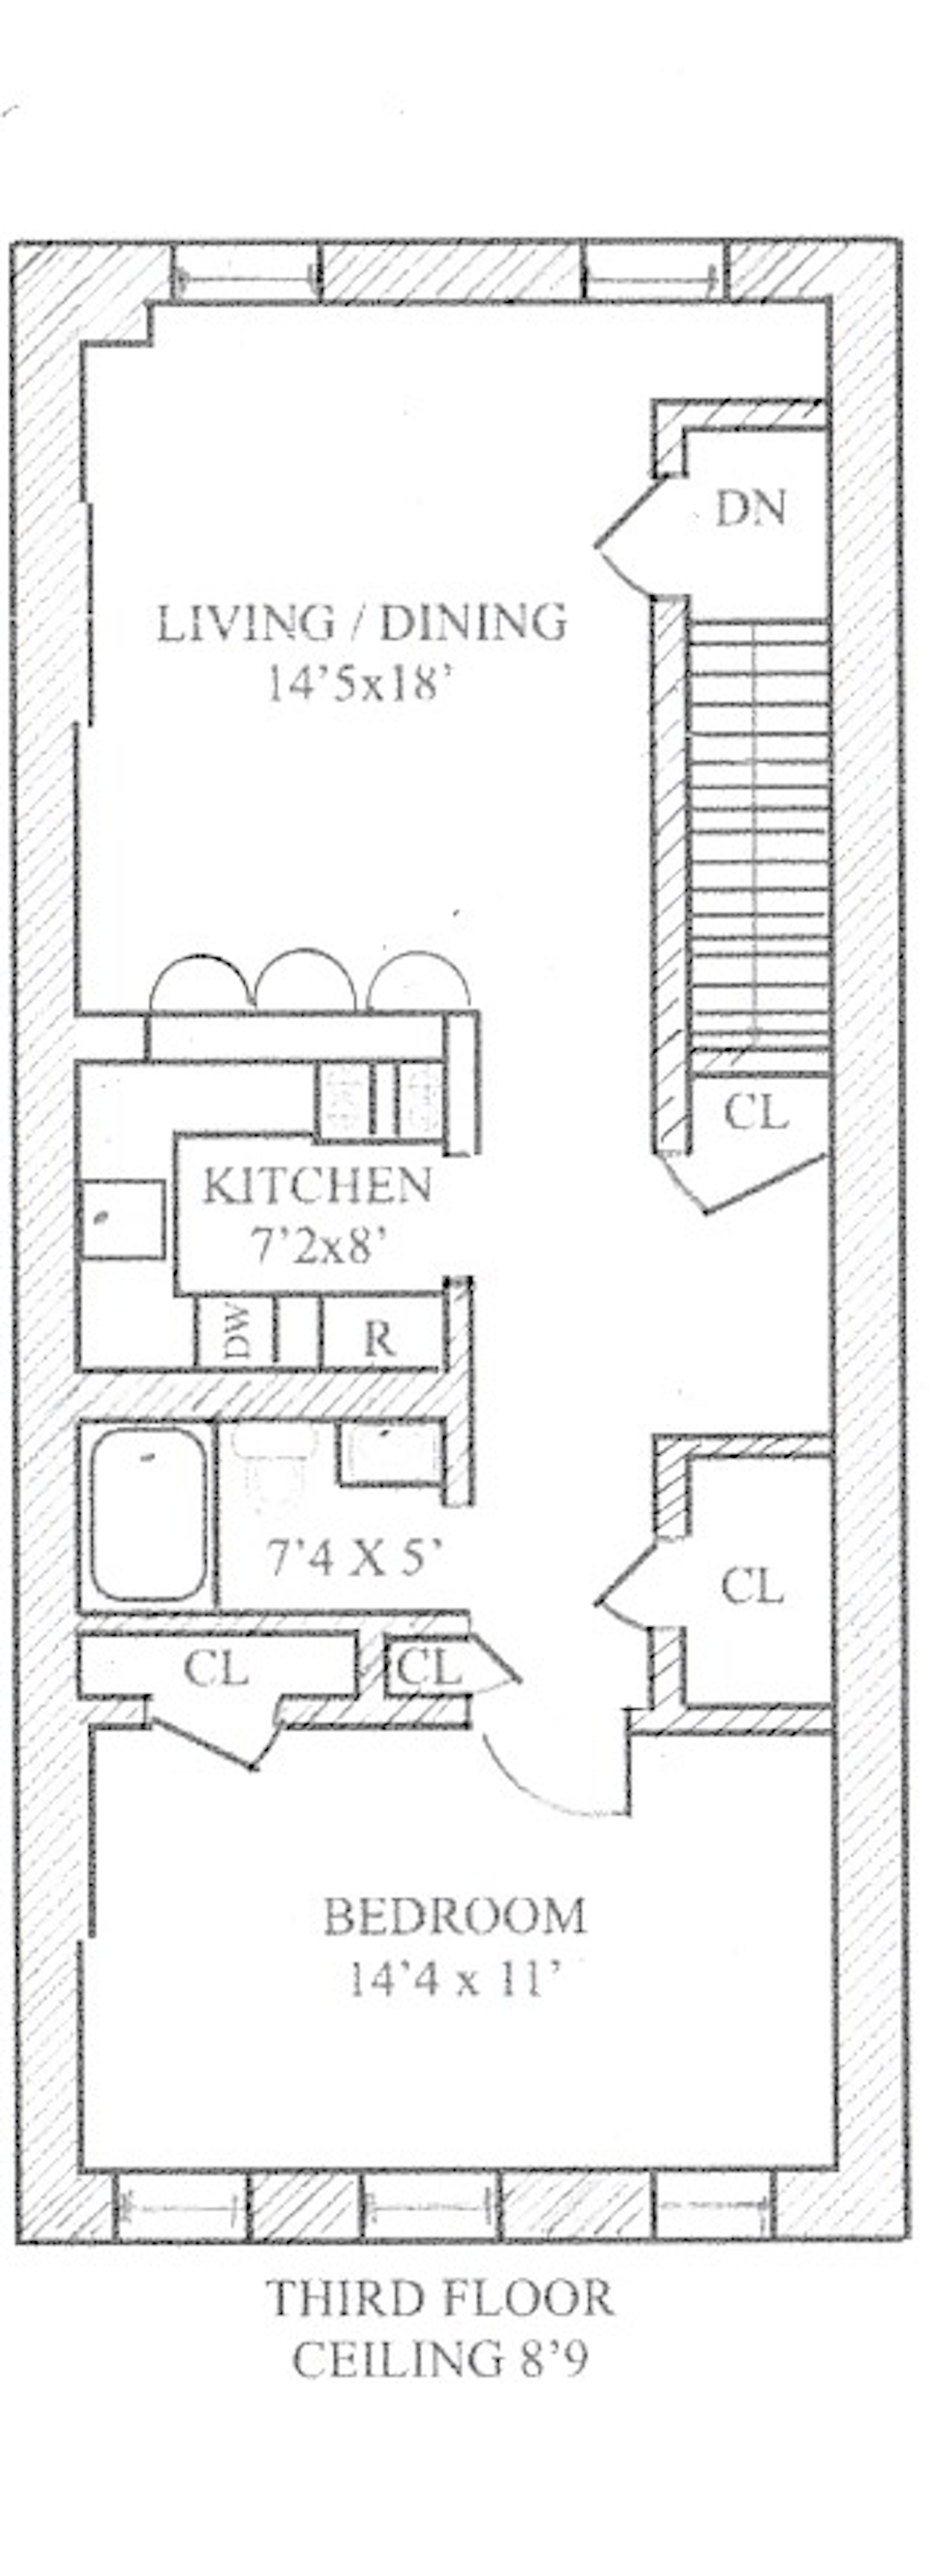 Floorplan for 164 West 133rd Street, 3